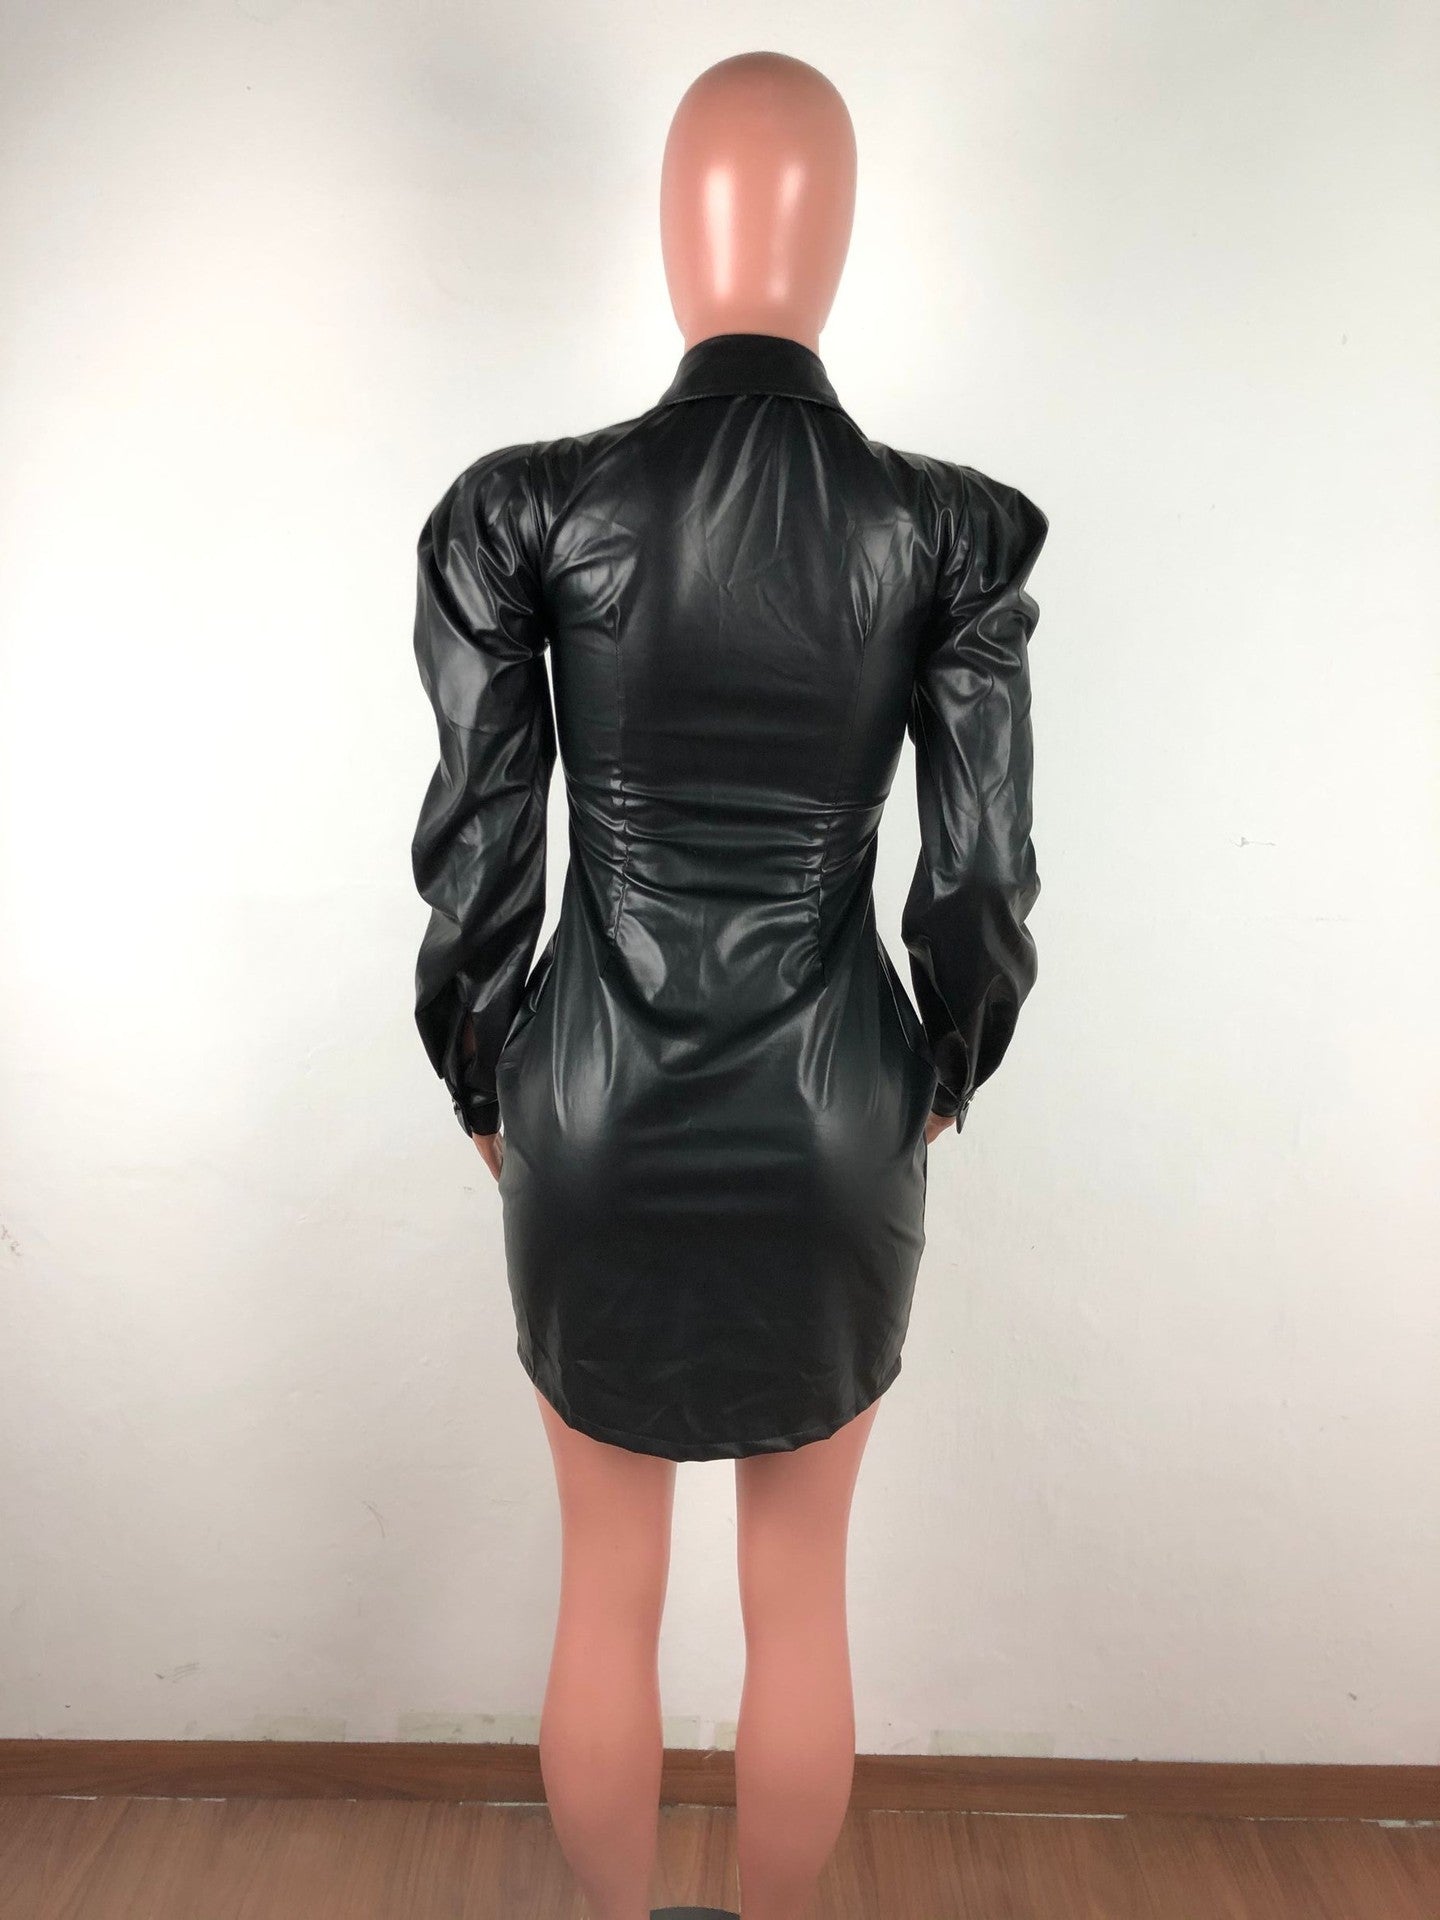 Leather dress